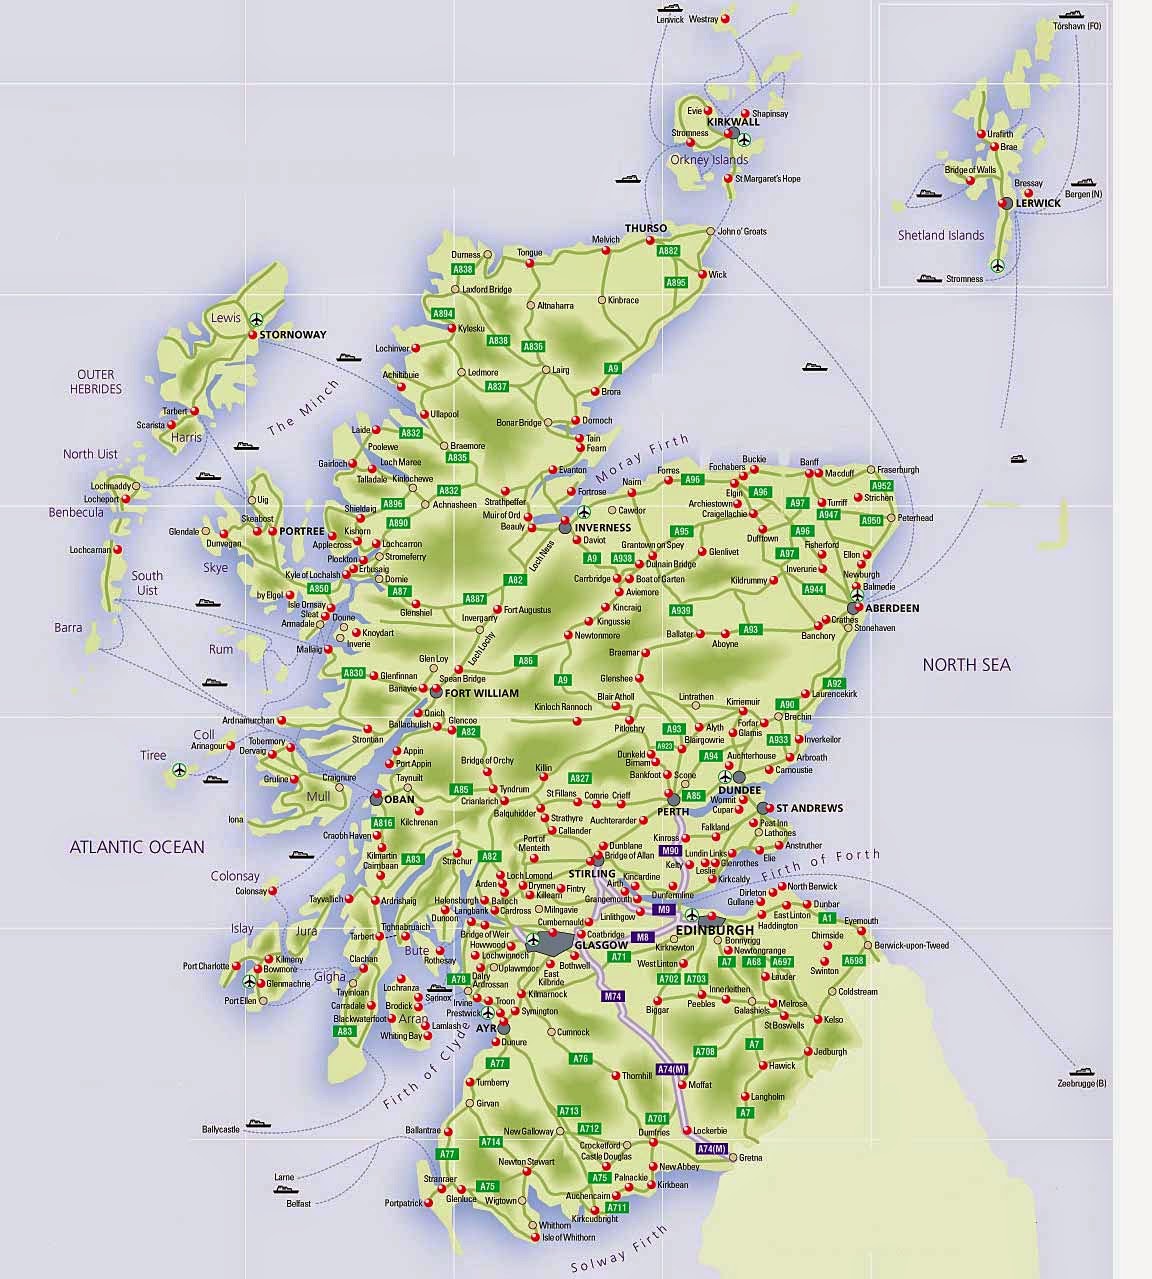 Maps of Scotland